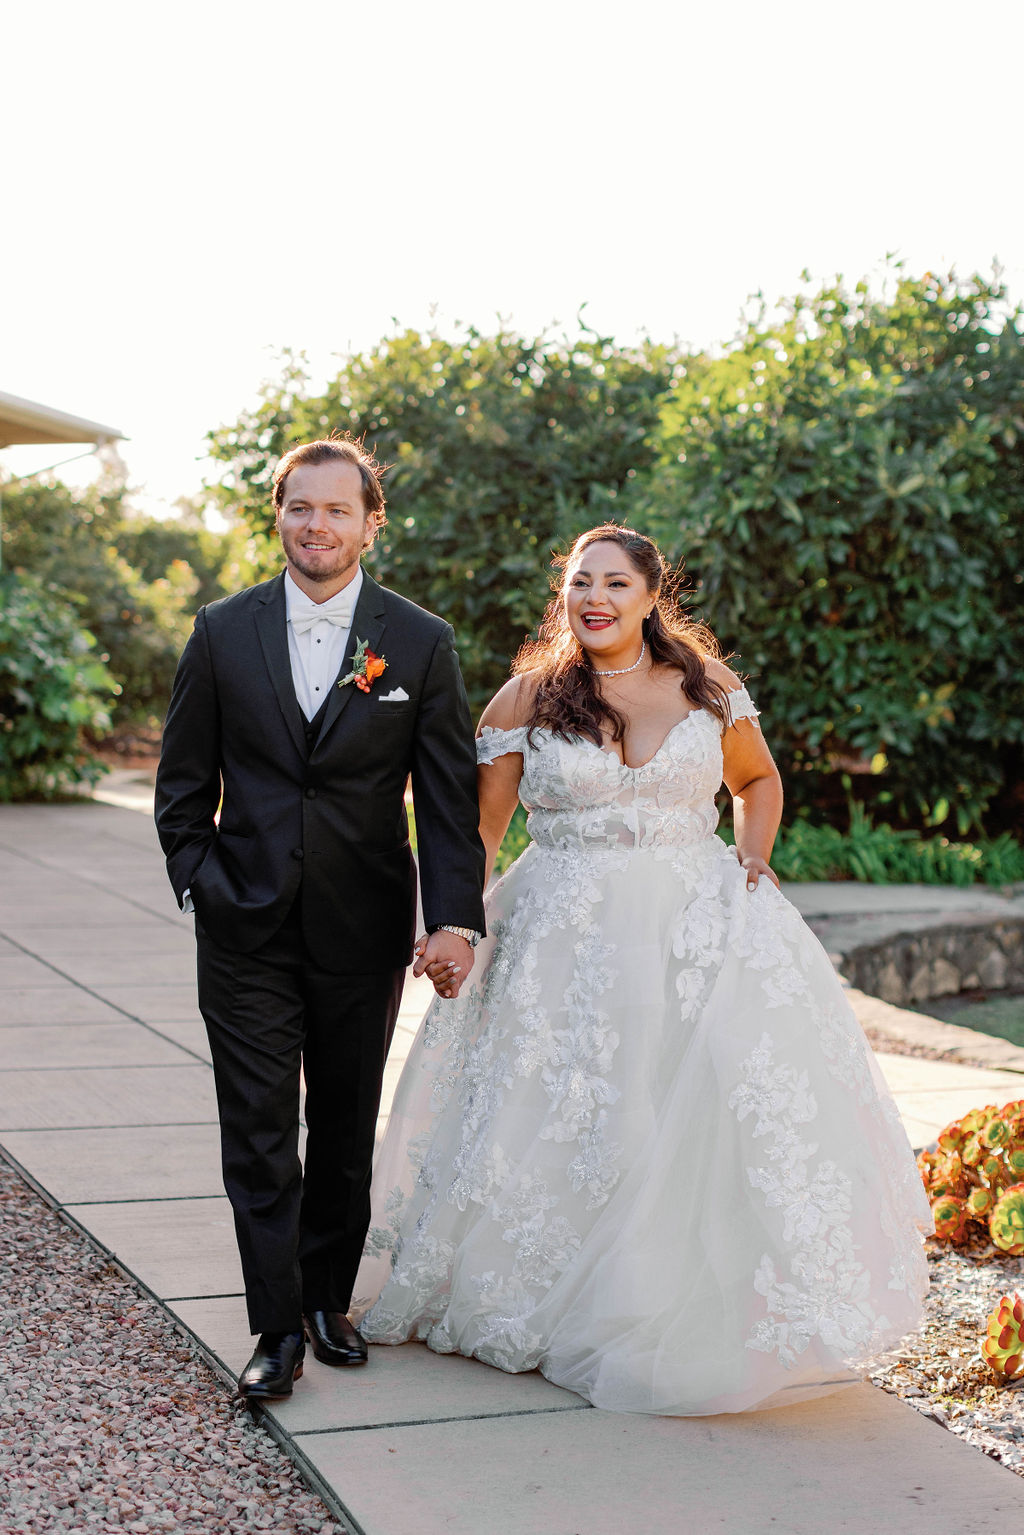 Happy bride and groom walking together at Mission Santa Barbara wedding | Photo by Sarah Block Photography